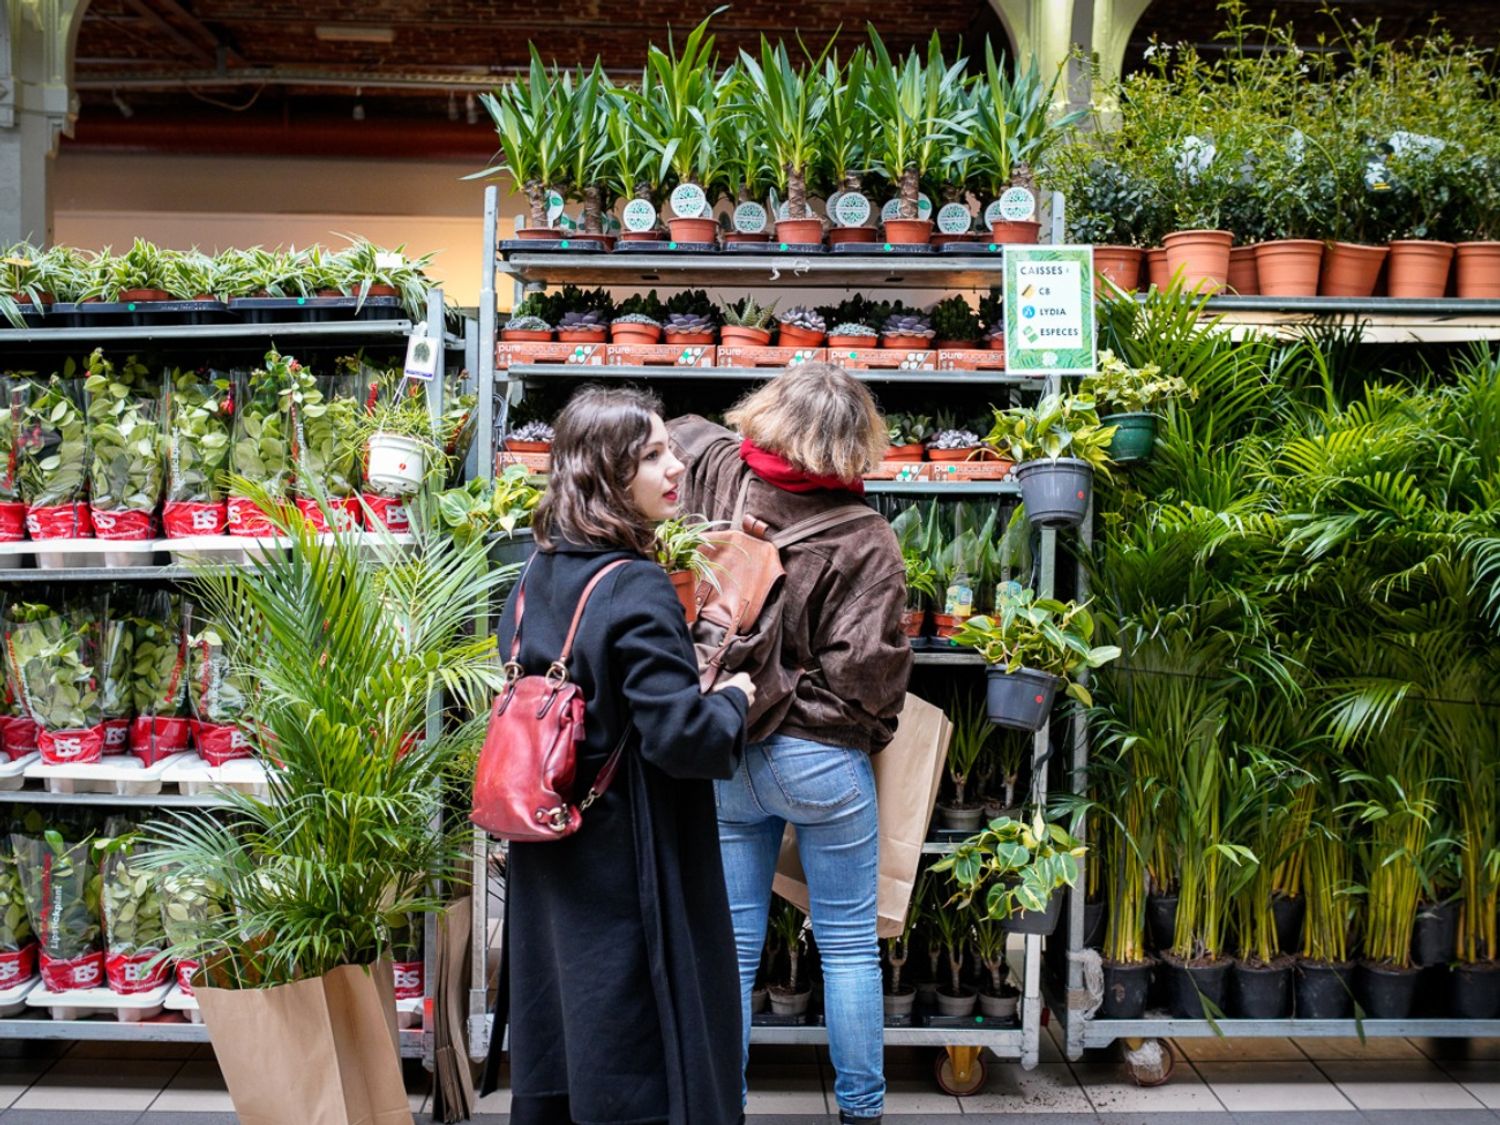 Vente de plantes à prix mini à Strasbourg